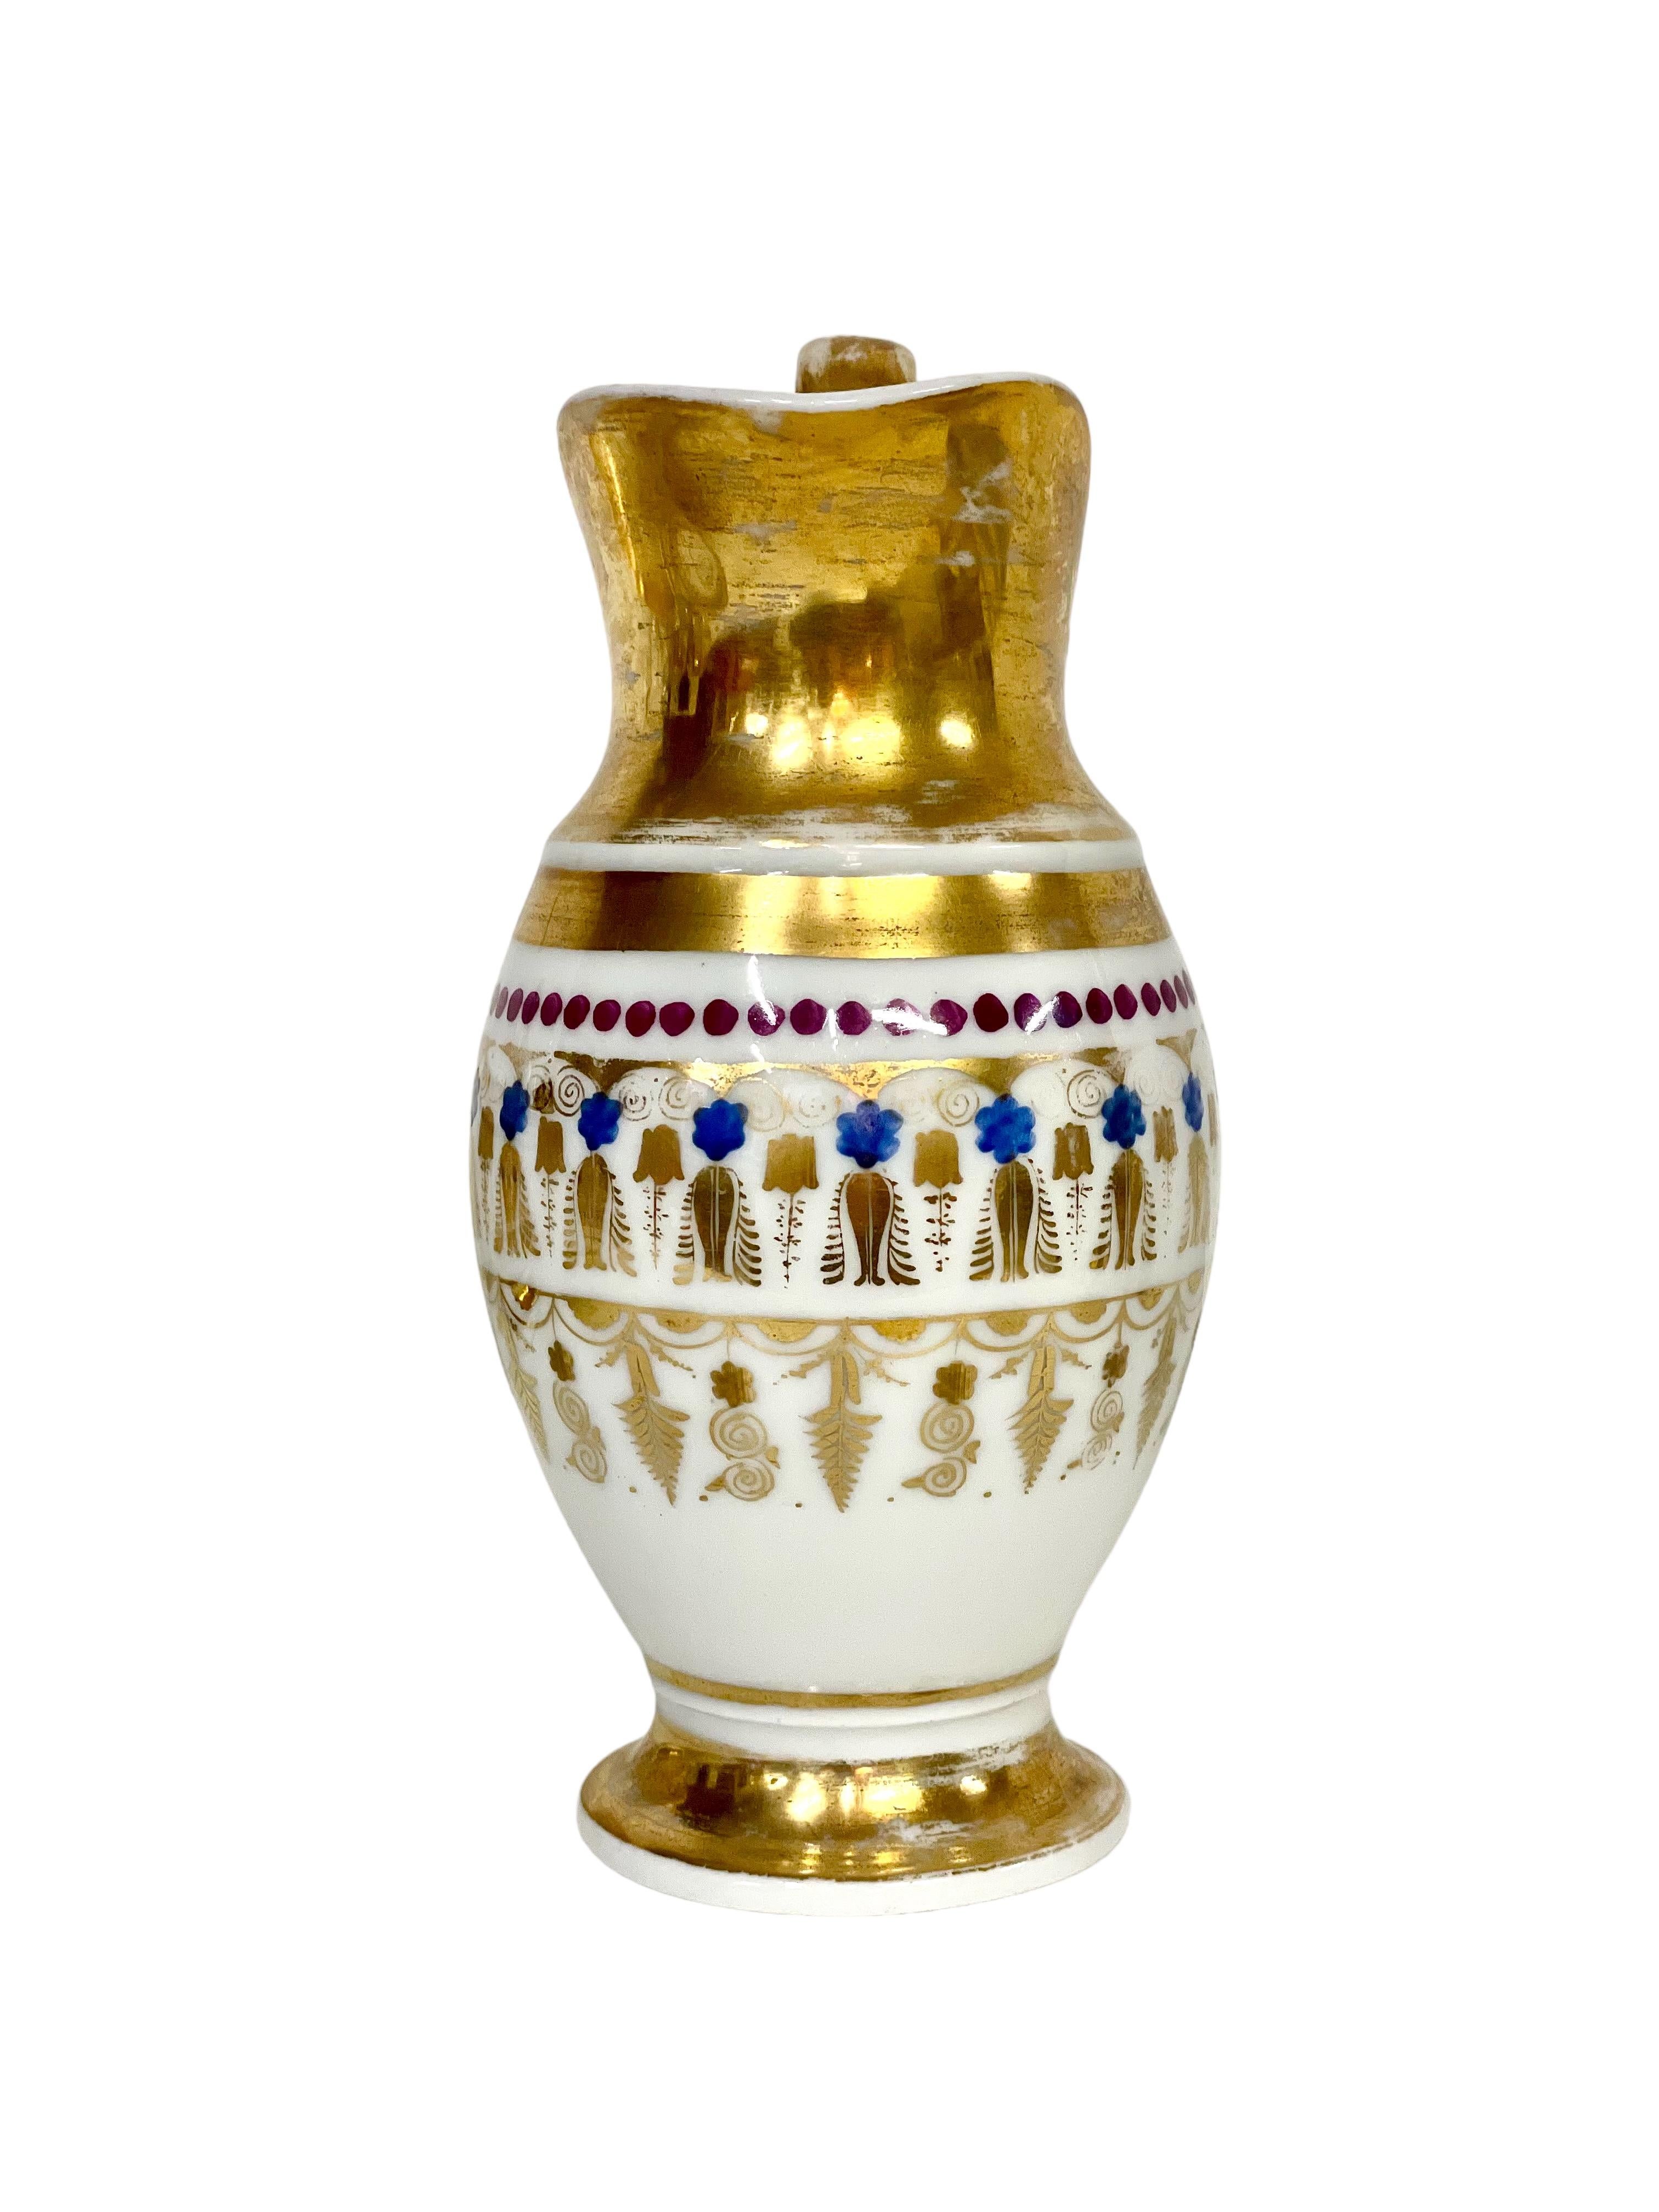 Empire Old Paris Porcelain Wash Jug and Basin with Gilt Decoration For Sale